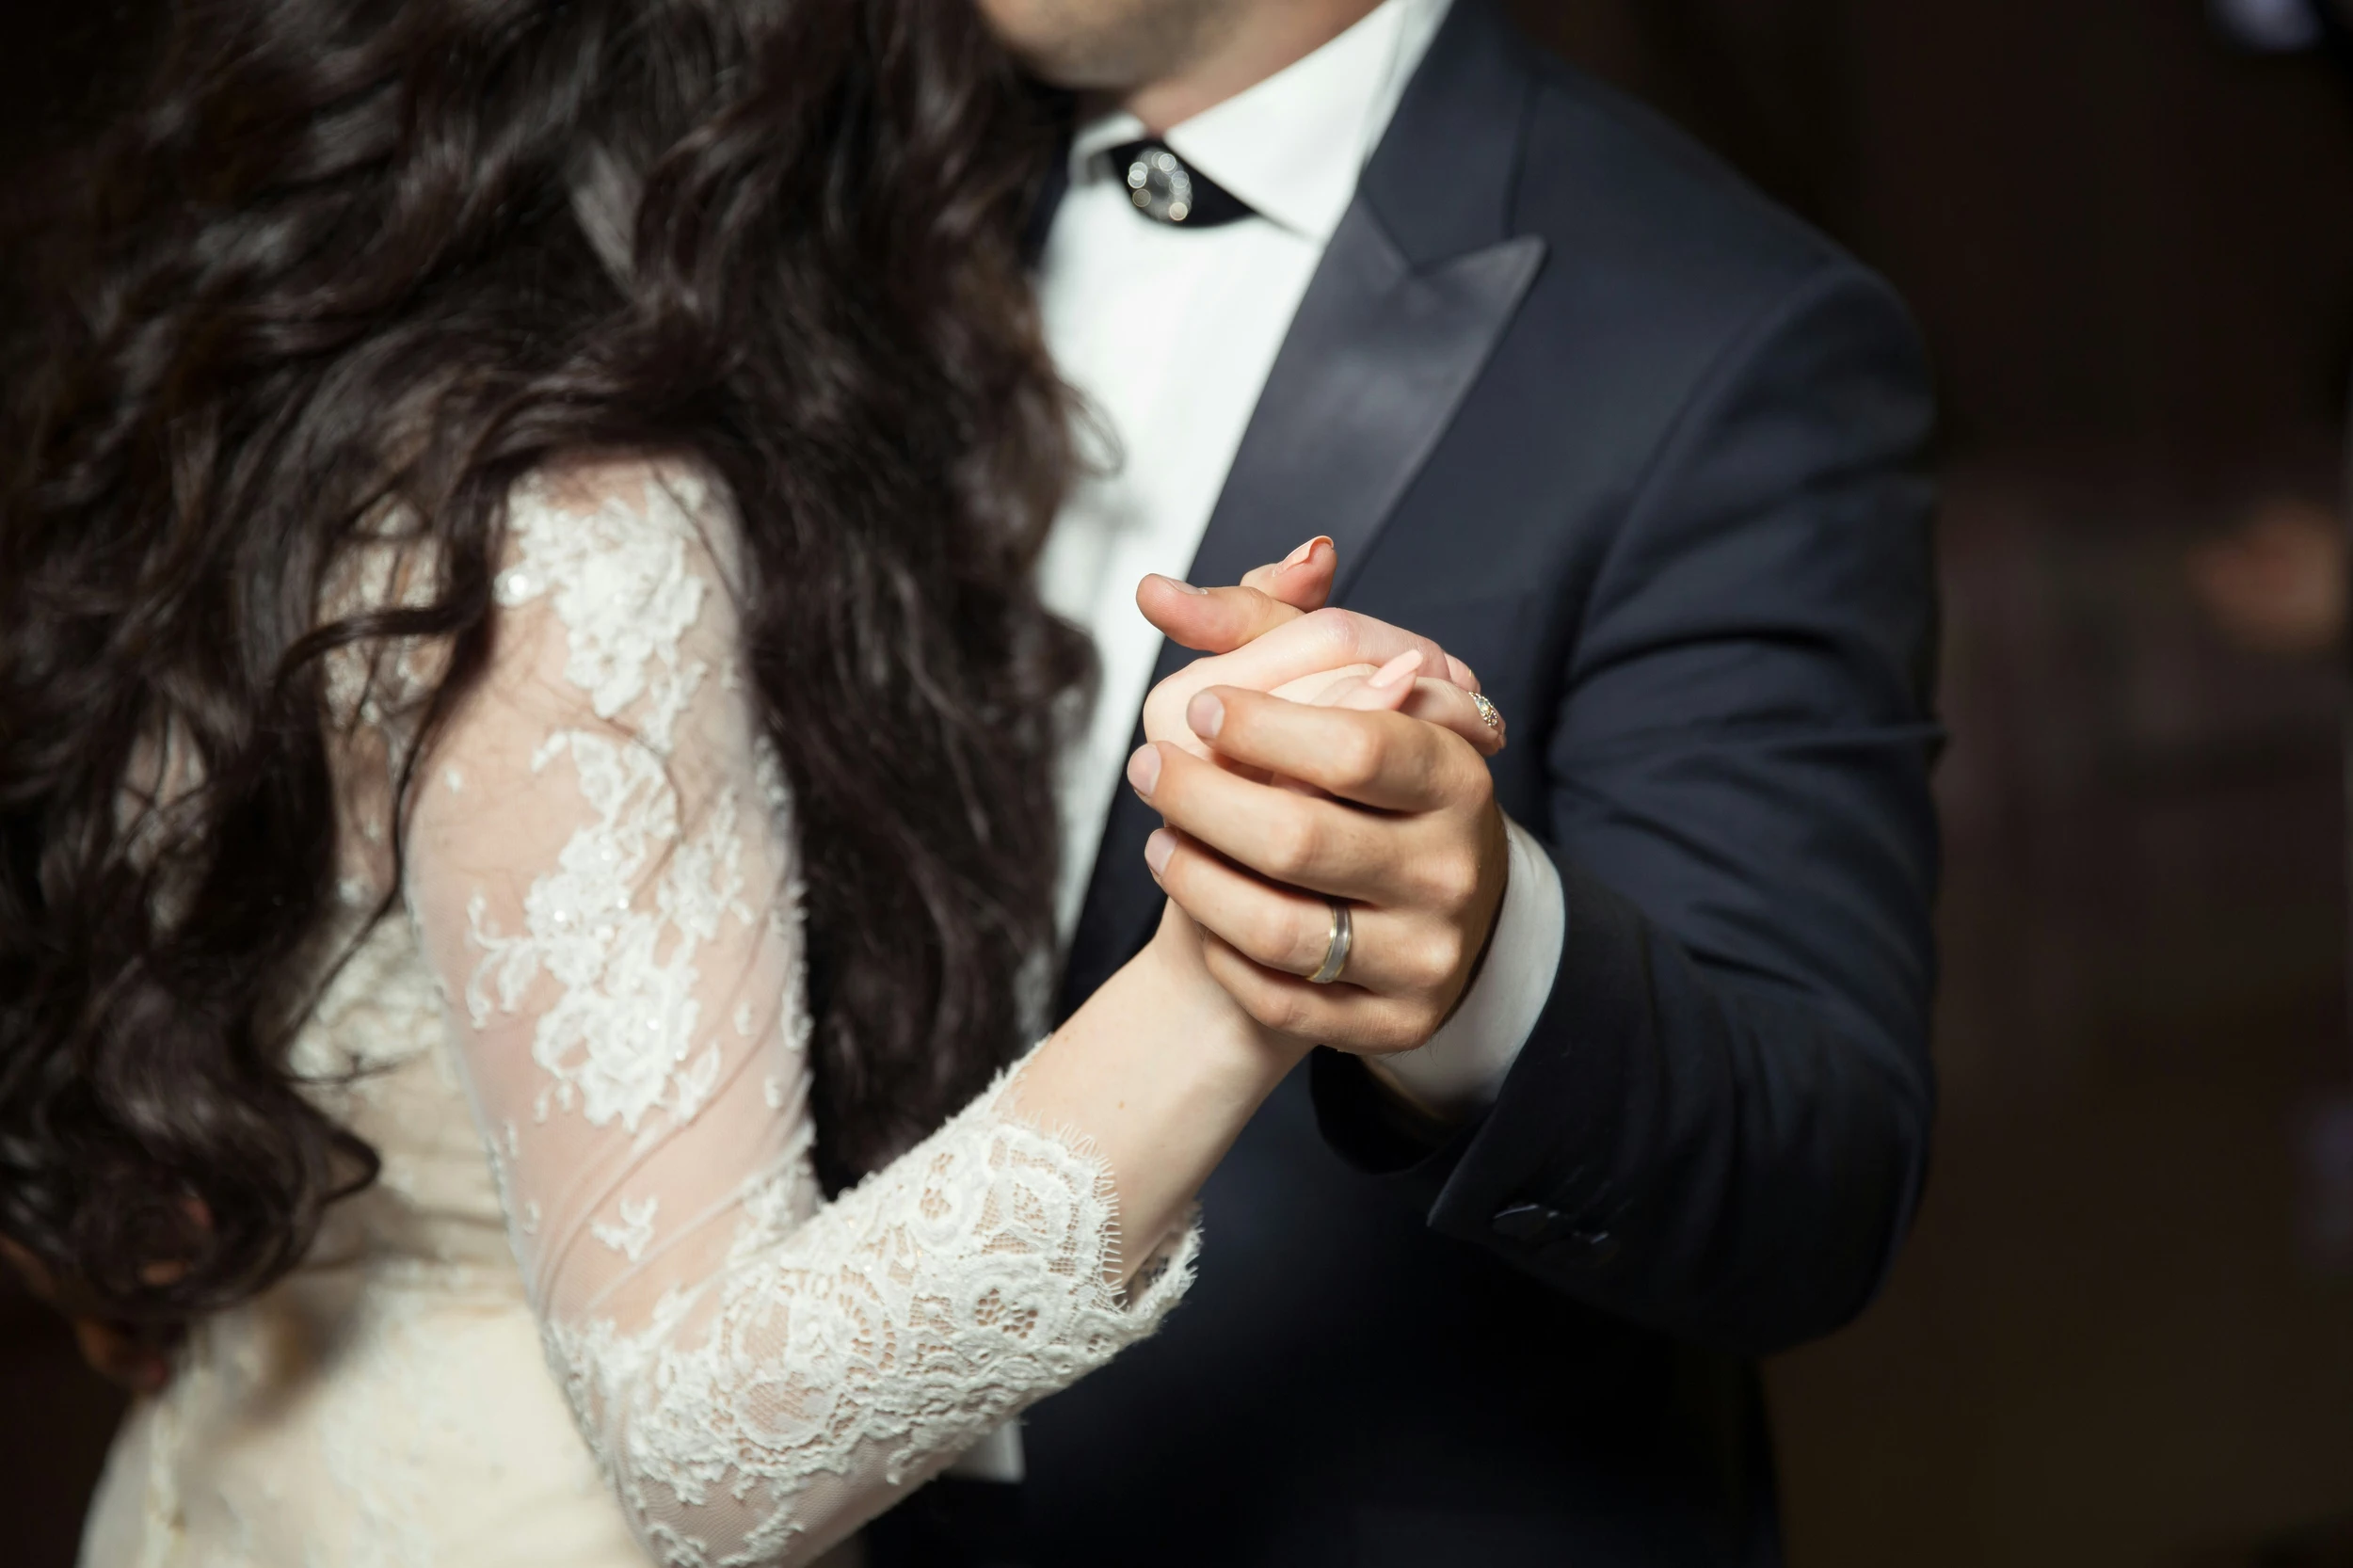 Louisiana Wedding Reception Traditions Explained